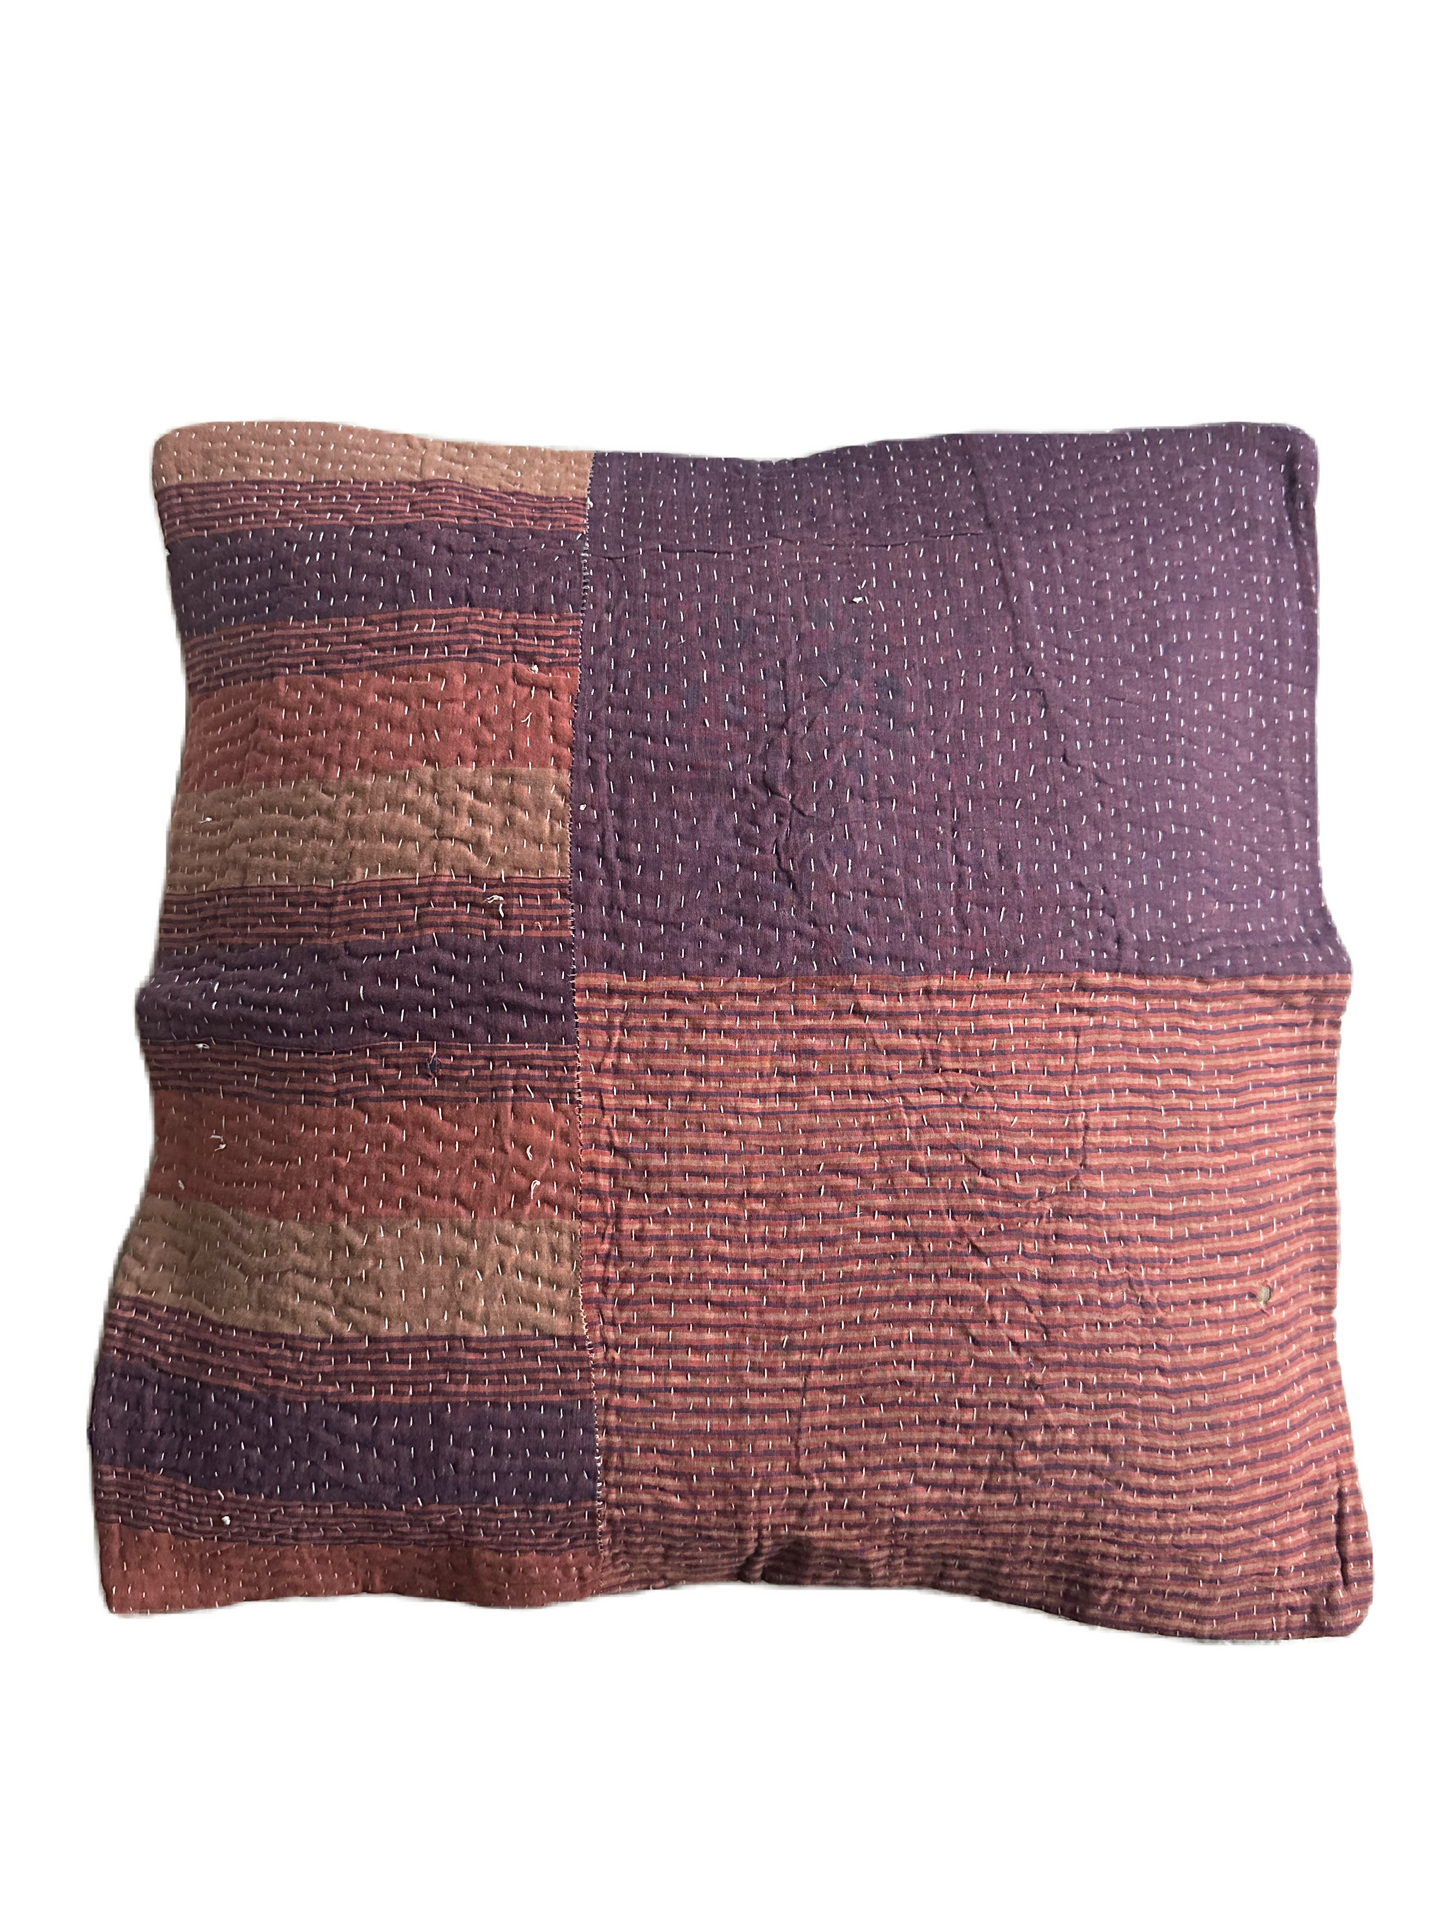 Kantha Pillow (50x50cm)